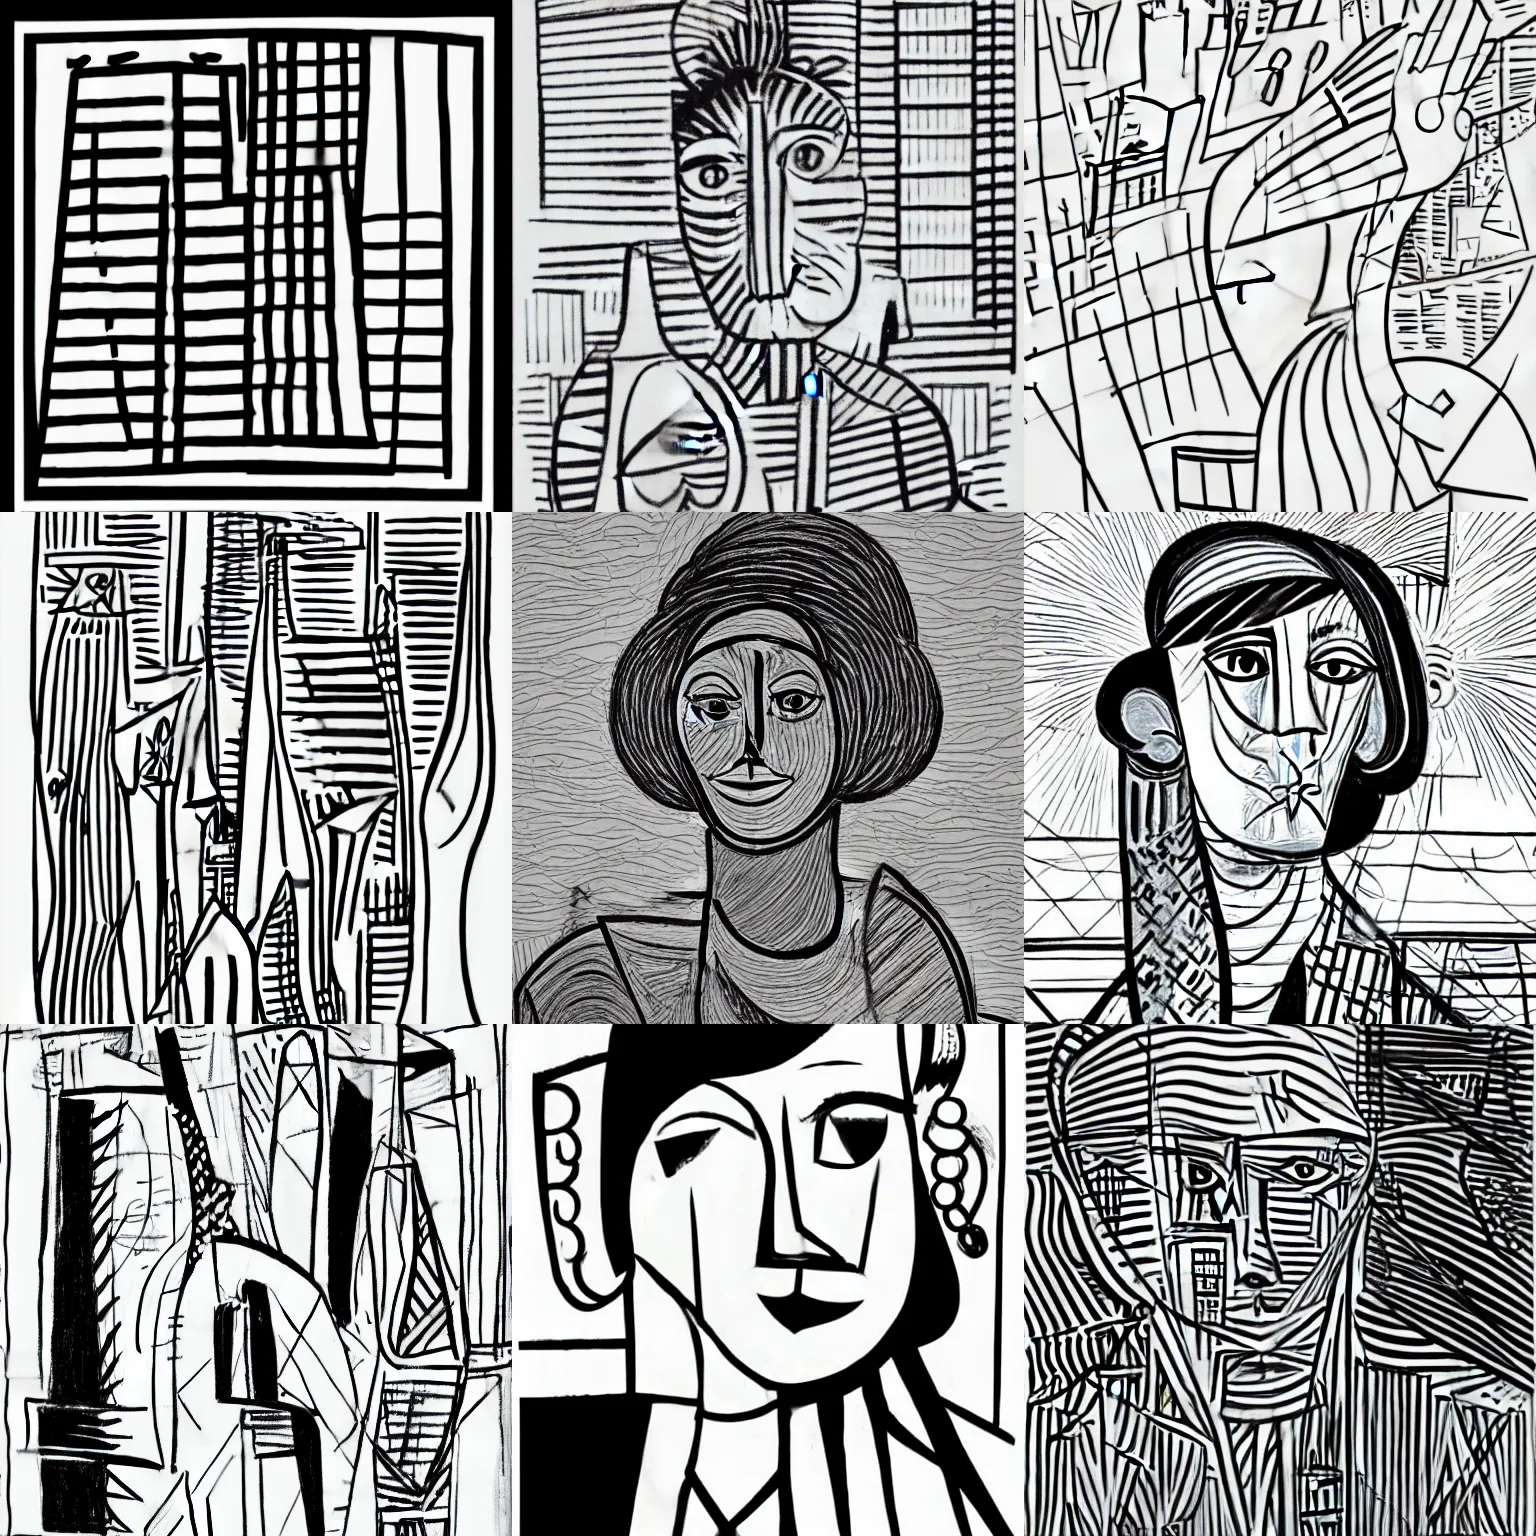 Prompt: Picasso minimal line art of New York City